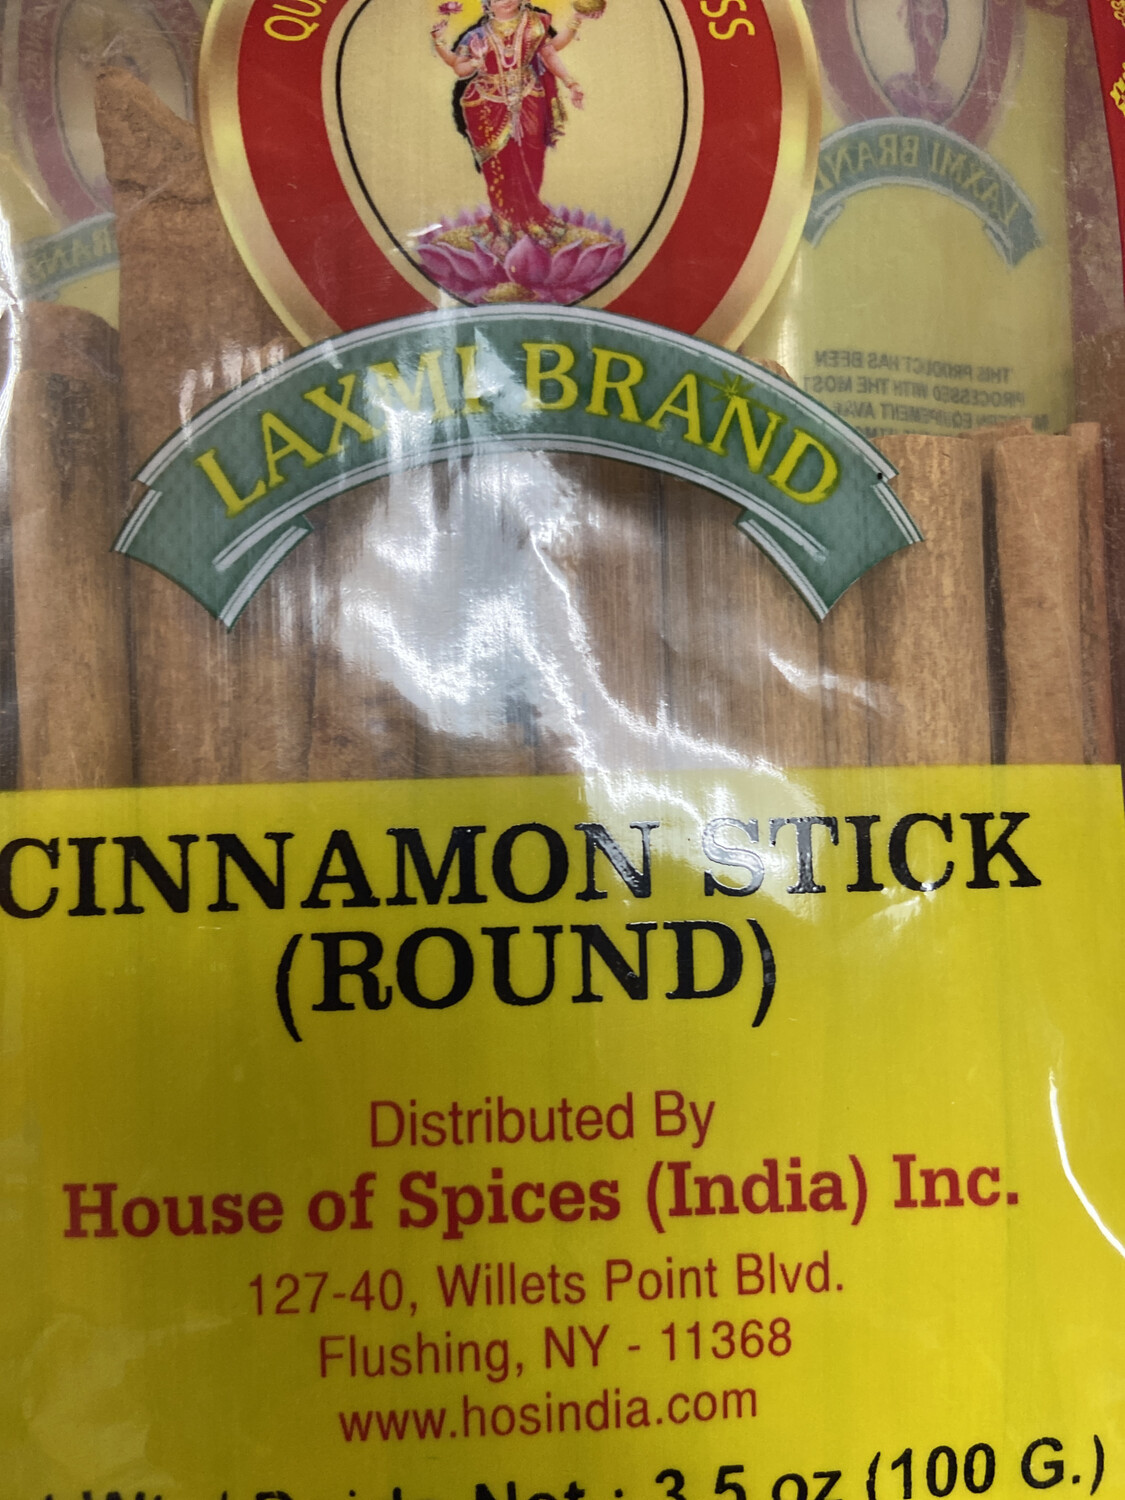 Laxmi Cinnamon Stick(round) 100g